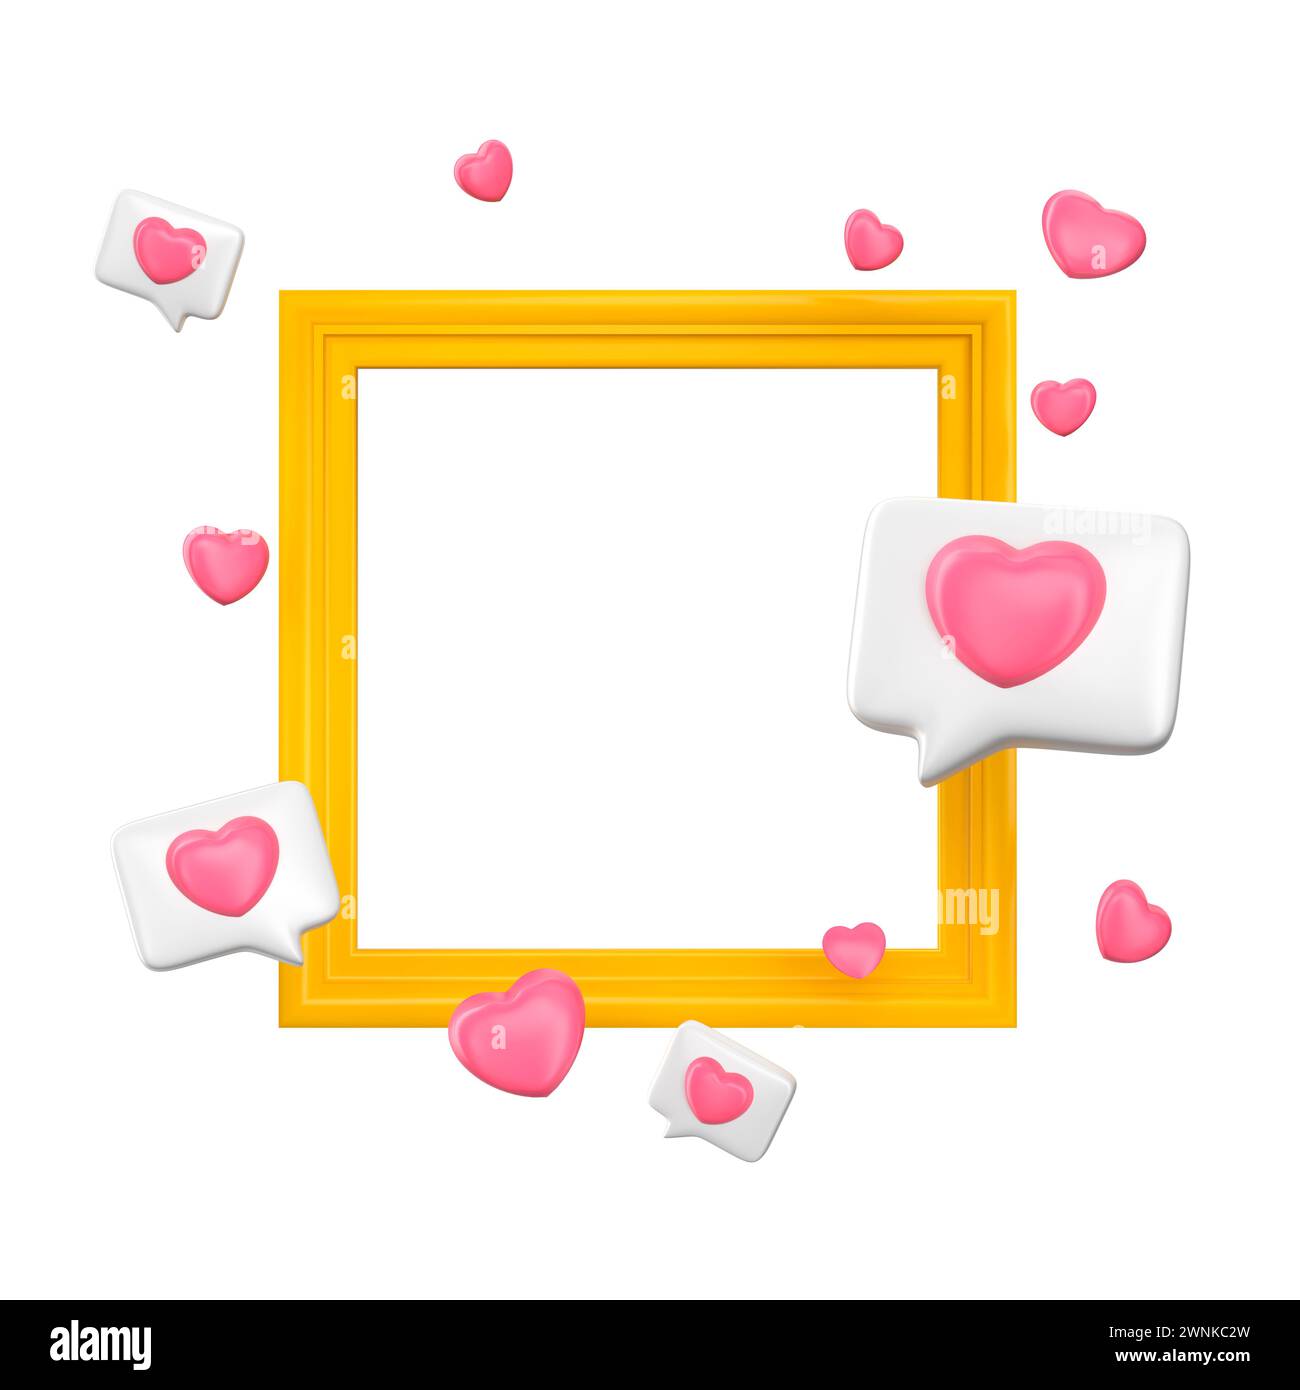 Gelber Rahmen mit isolierten Herzformen. Like- oder Love-Konzept-Mockup. 3D-Rendering Stockfoto